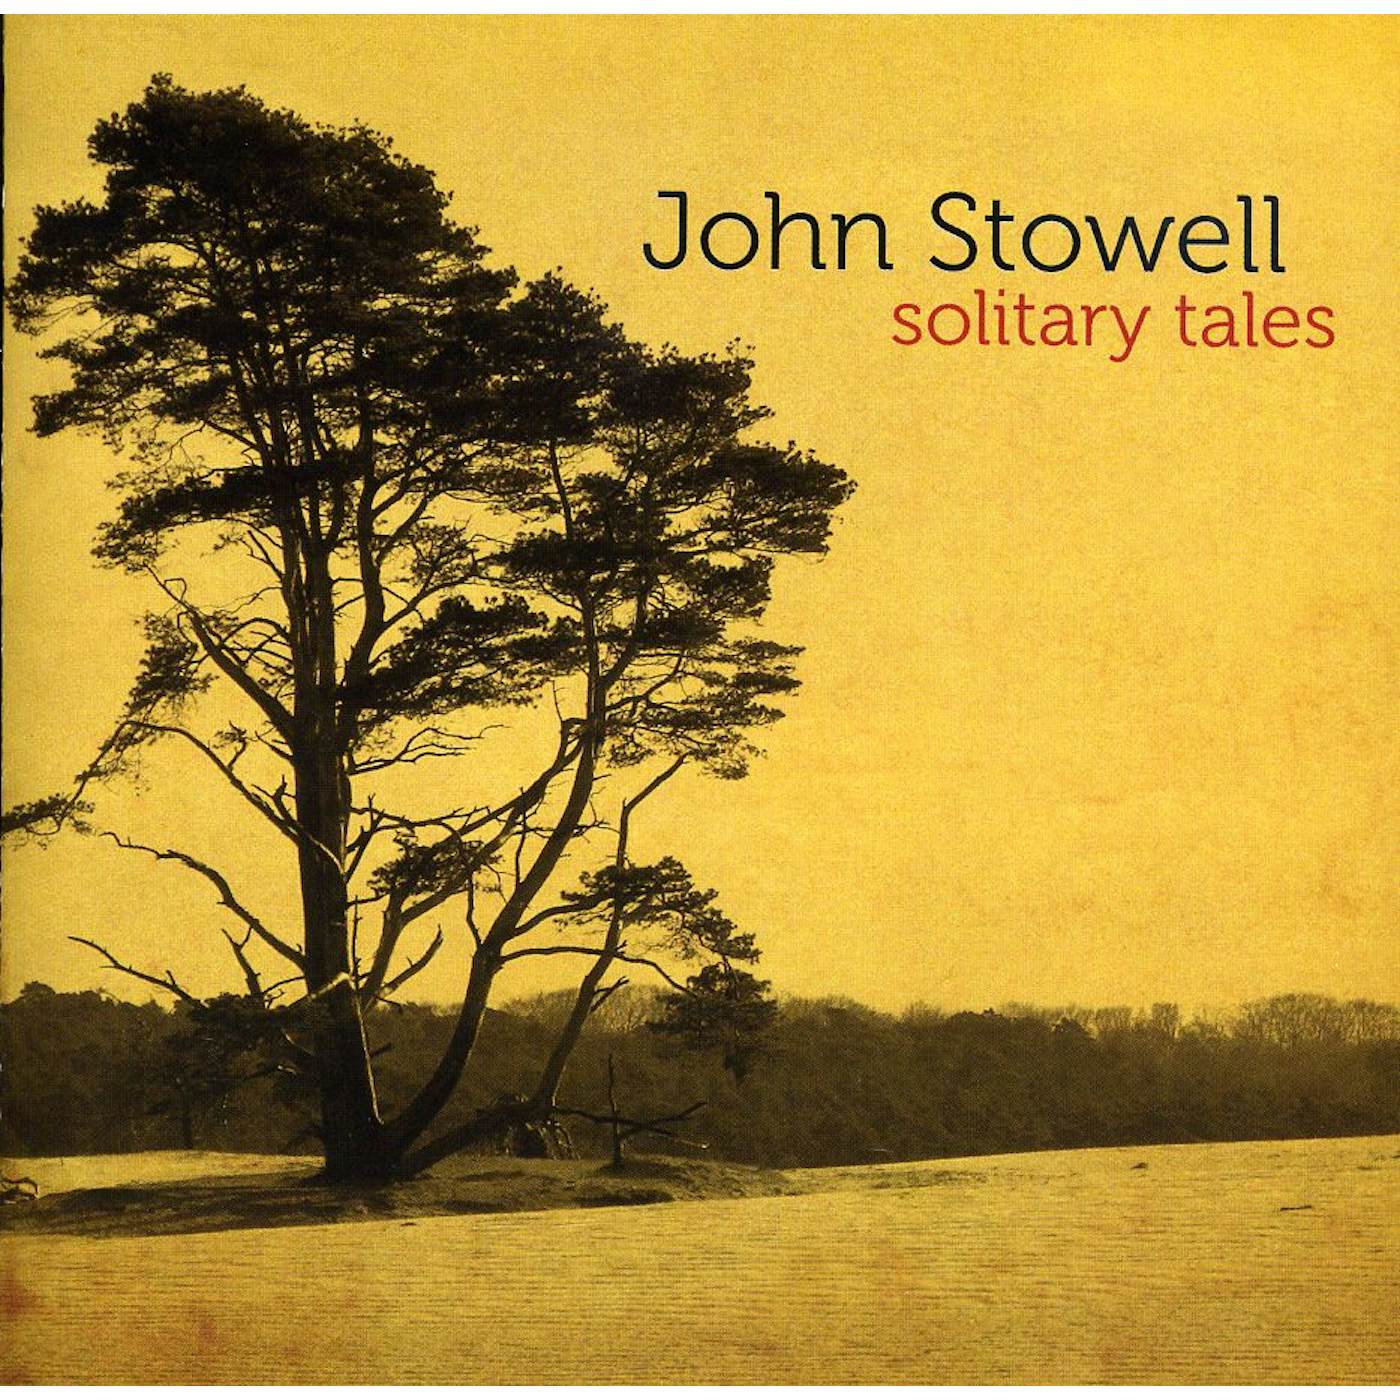 John Stowell SOLITARY TALES CD